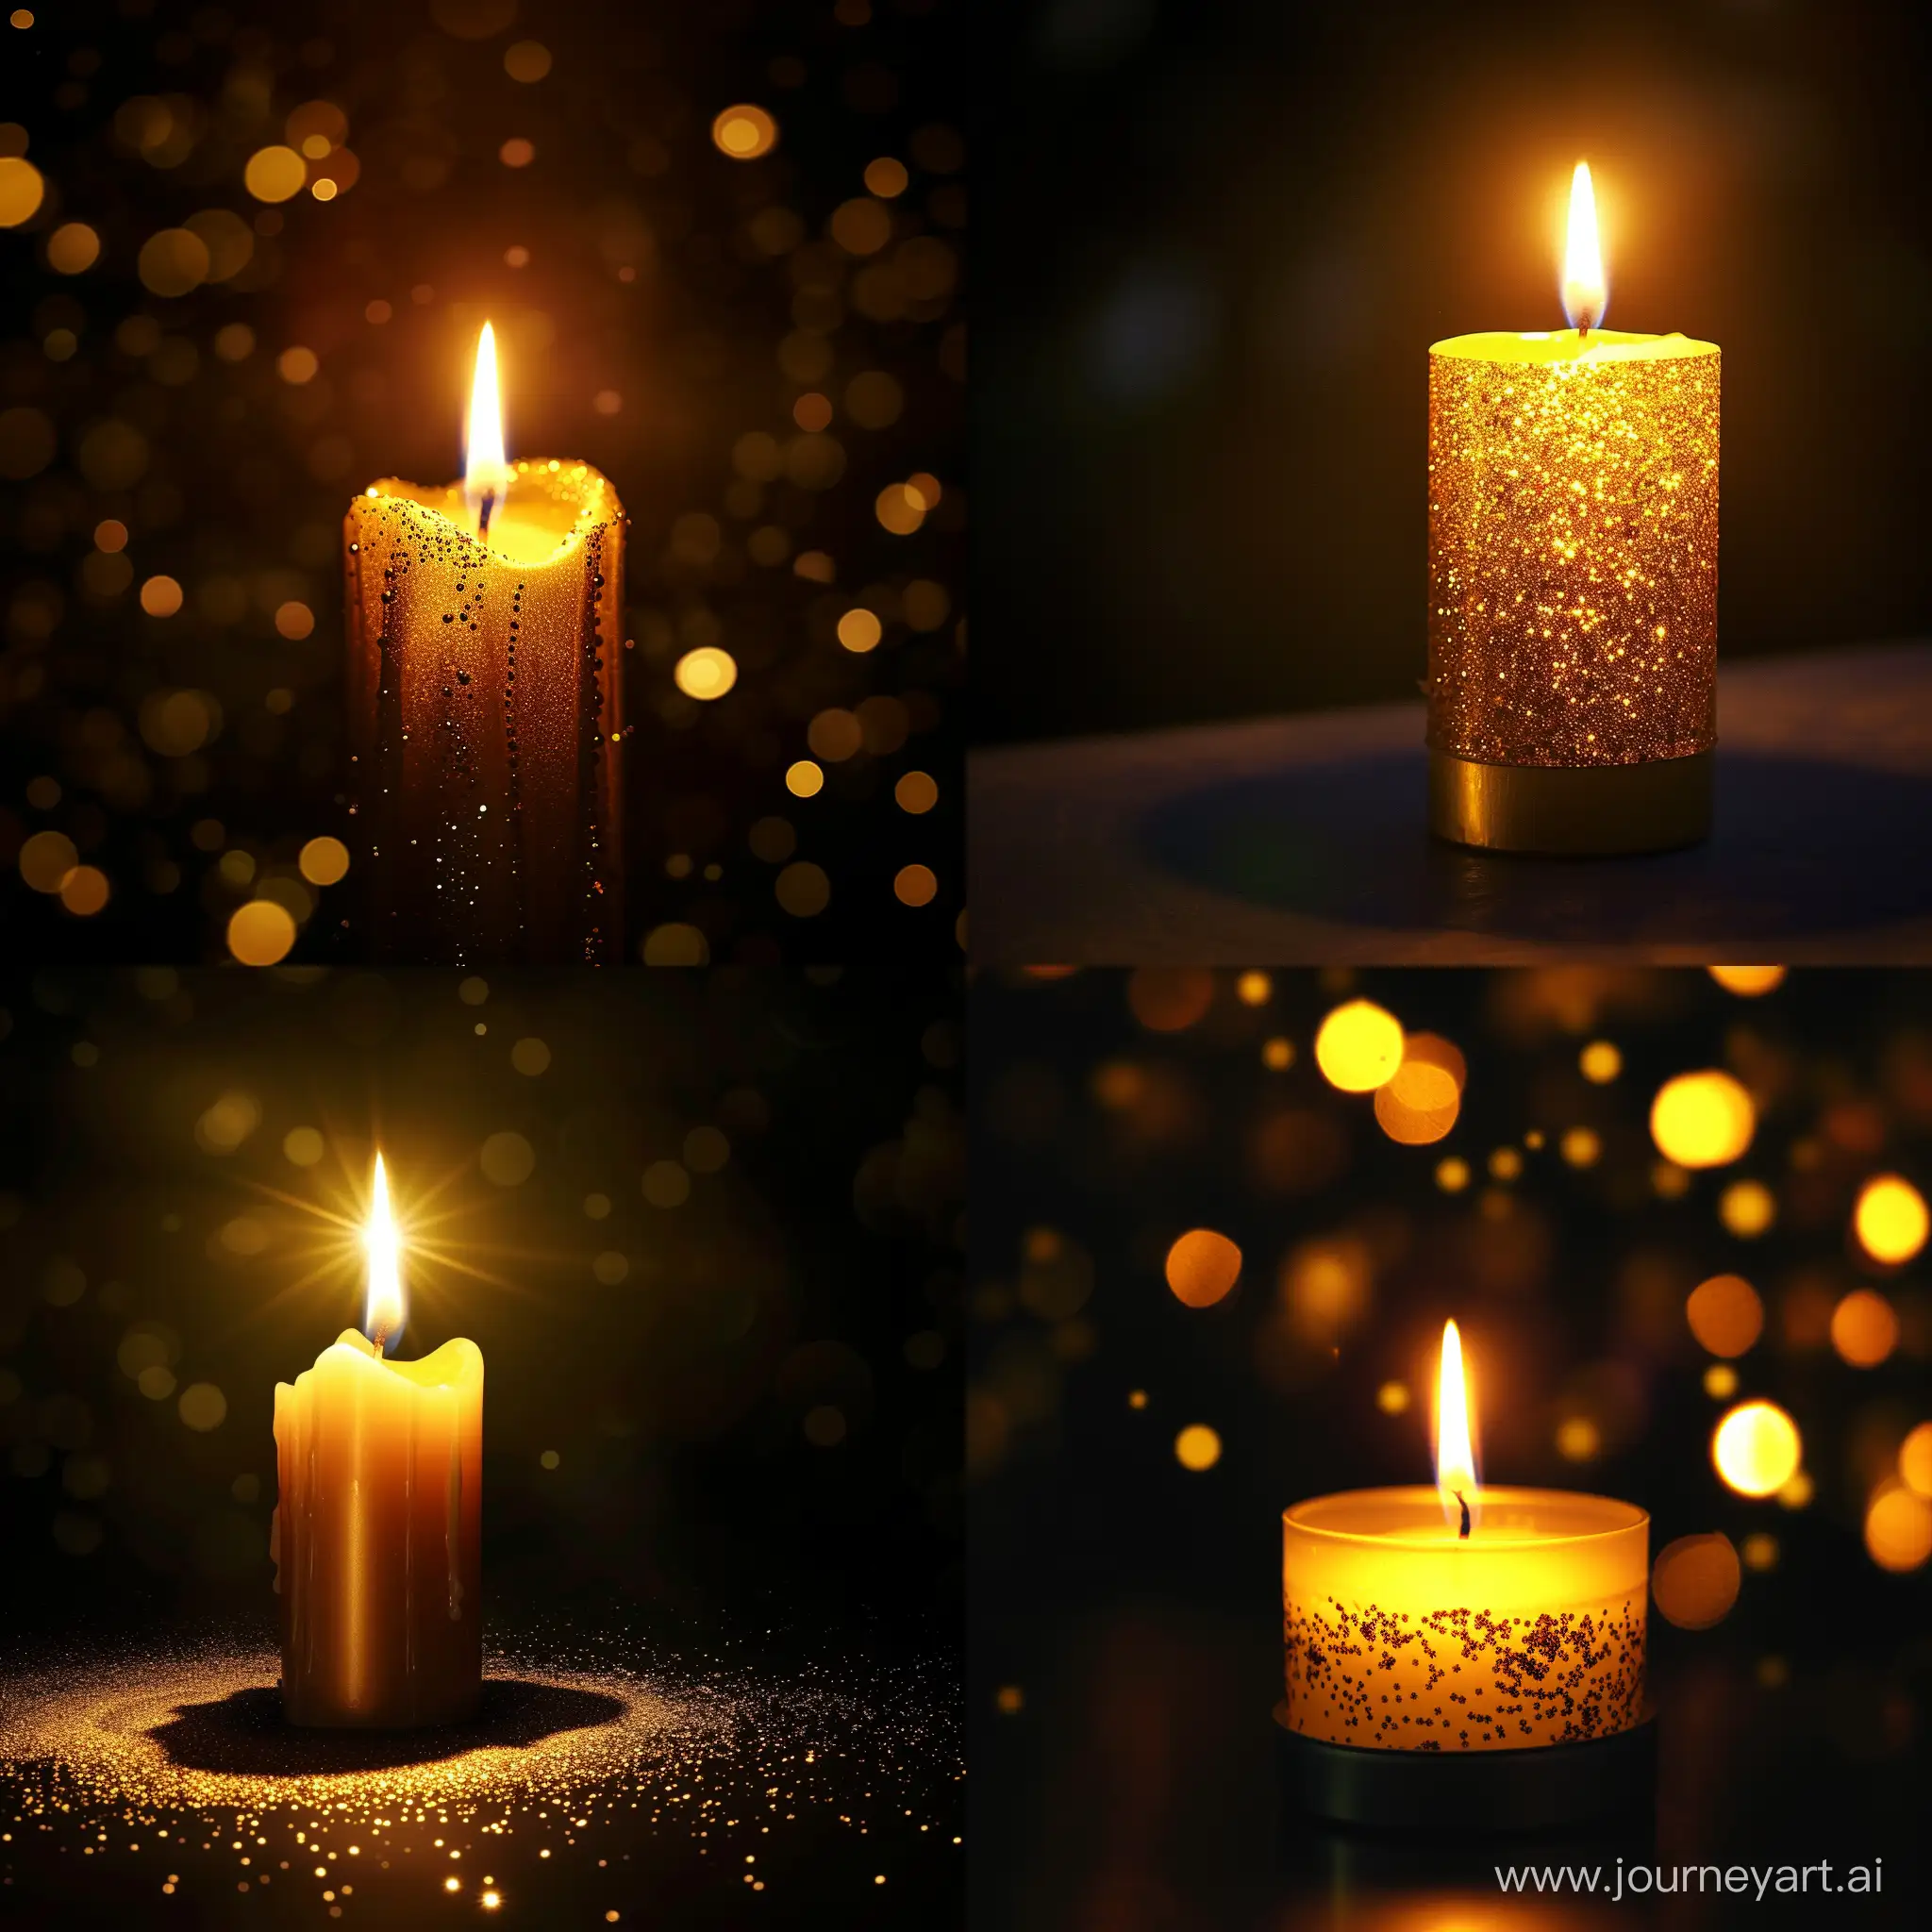 Golden-Candle-Illuminating-Darkness-Symbol-of-Hope-and-Joy